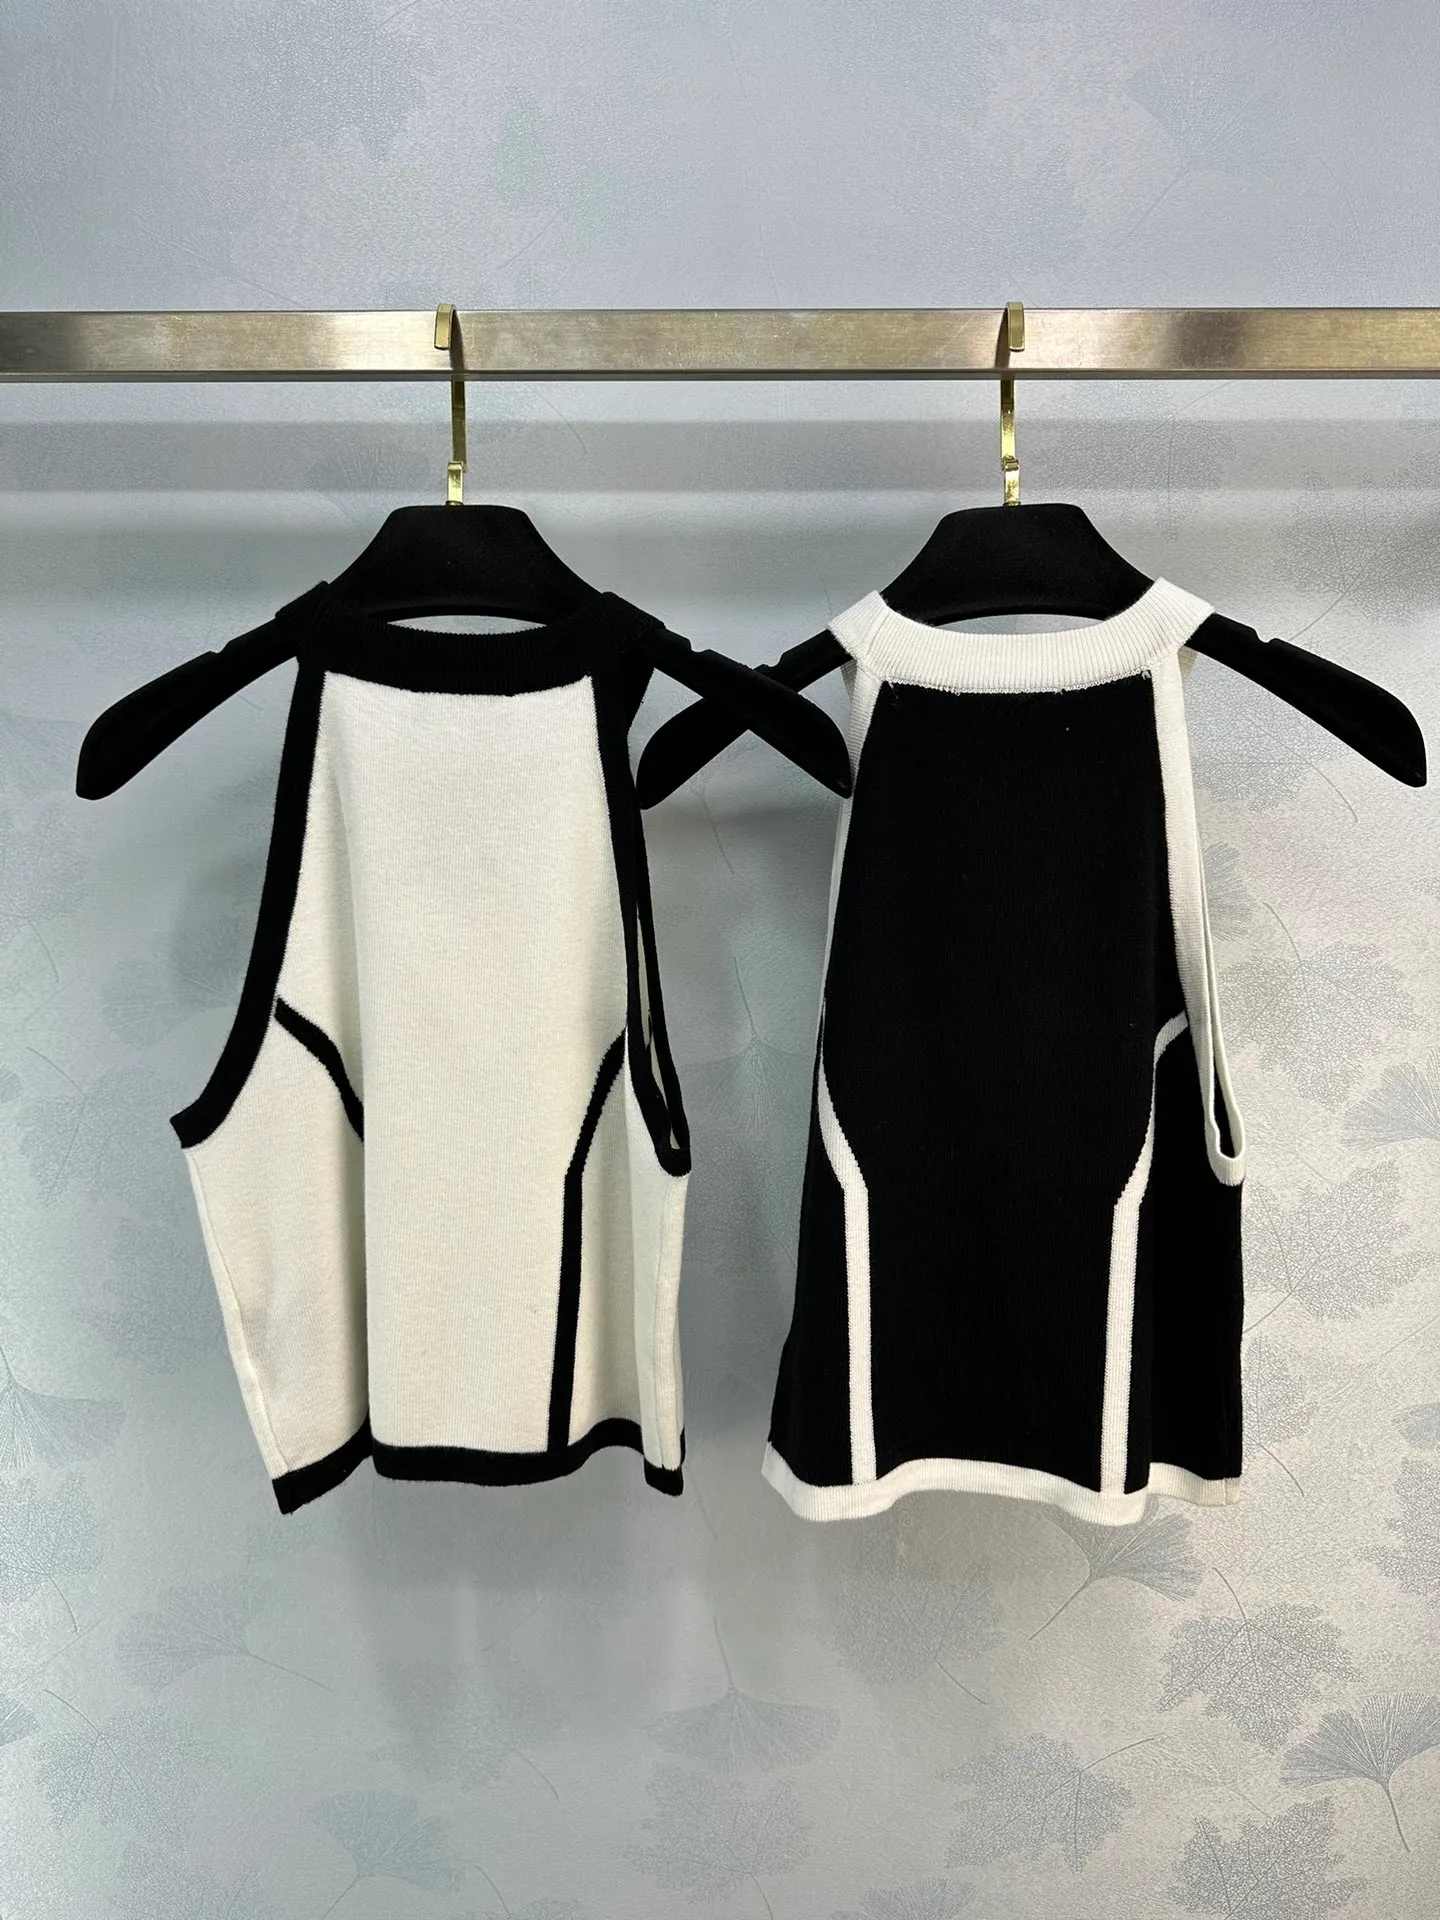 BA1 Main Women's Outerwear Vest Vest Luxury Designer Summer Classic Top و White Black Rebtled Stest Camellia Slim Fit Swated Sweater